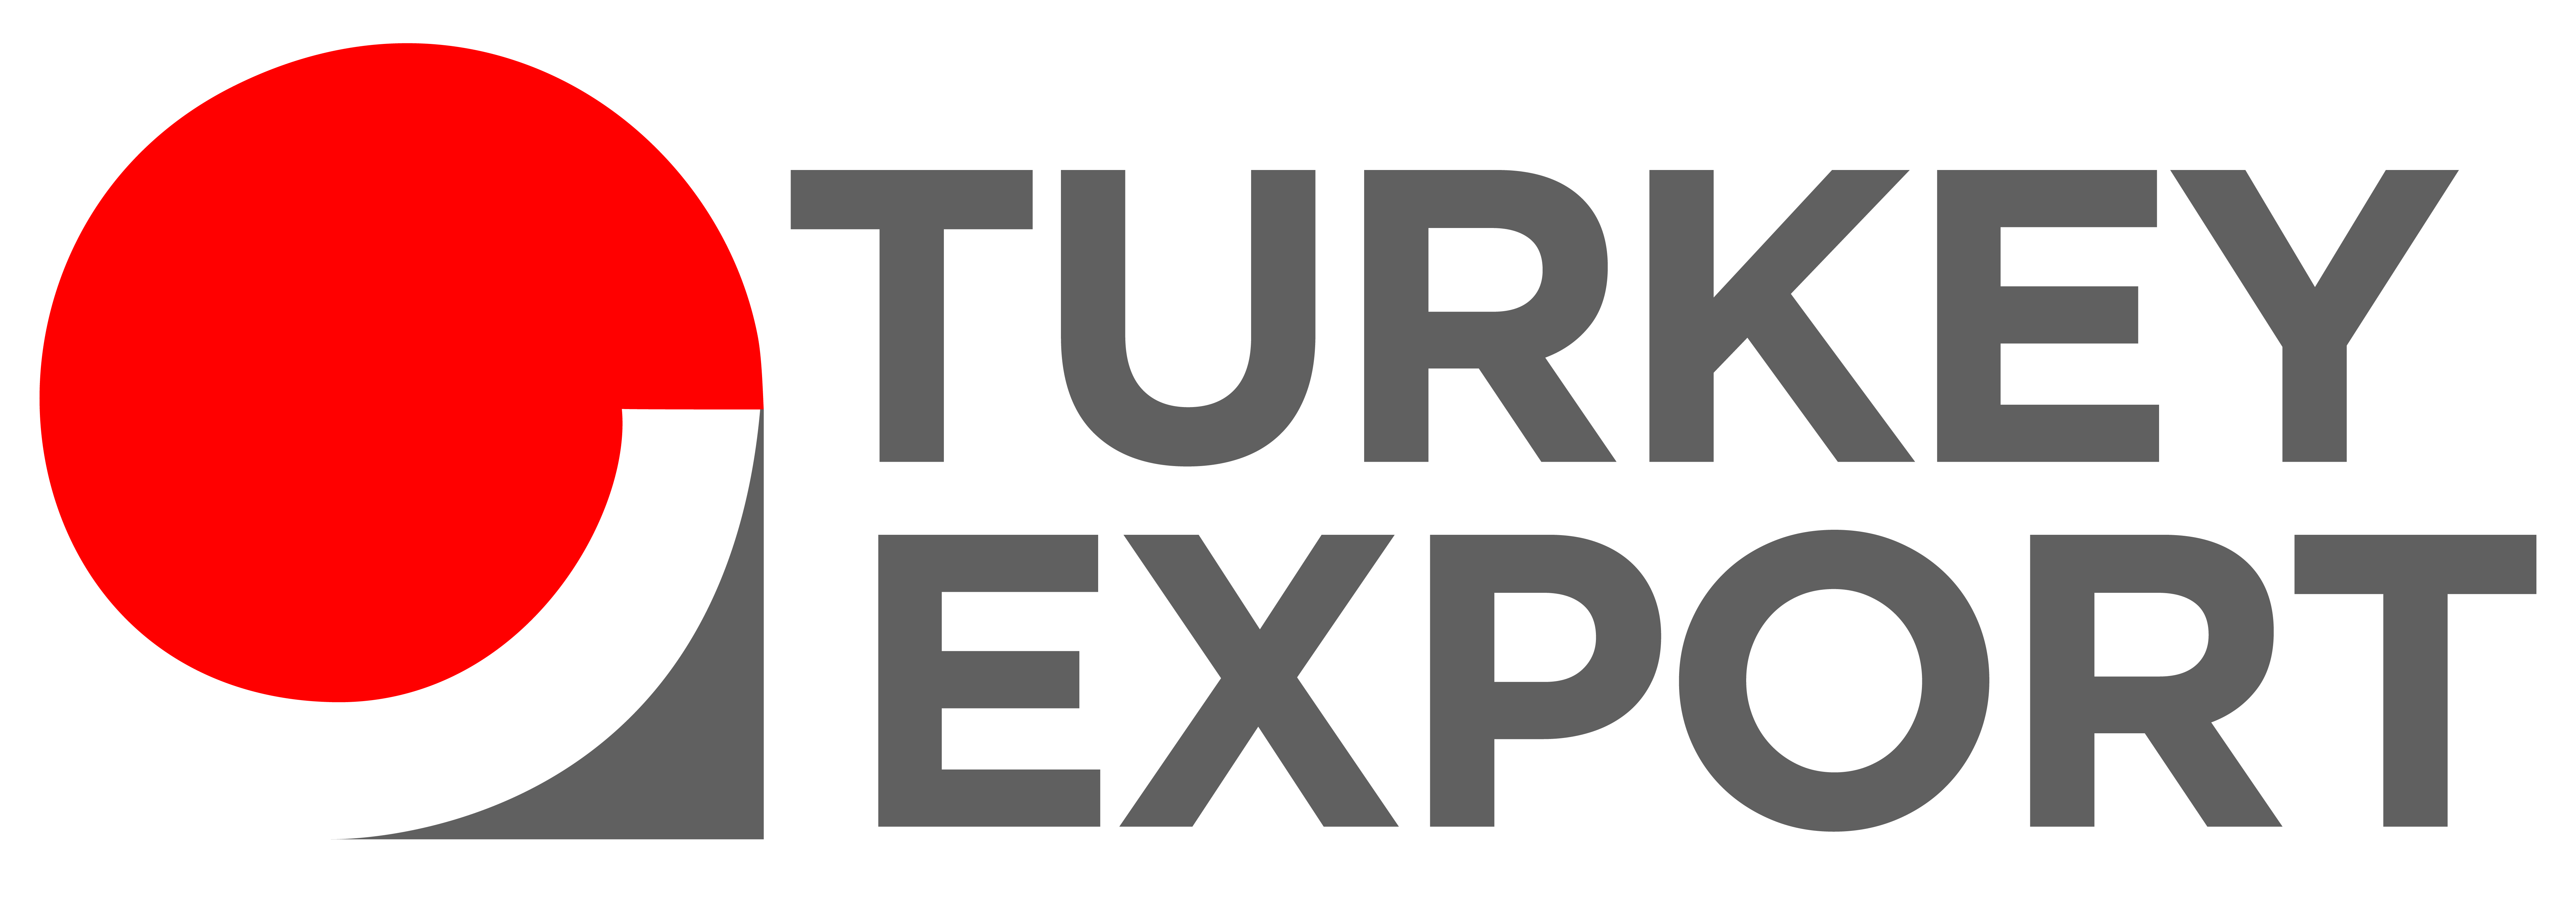 Turkishexport 